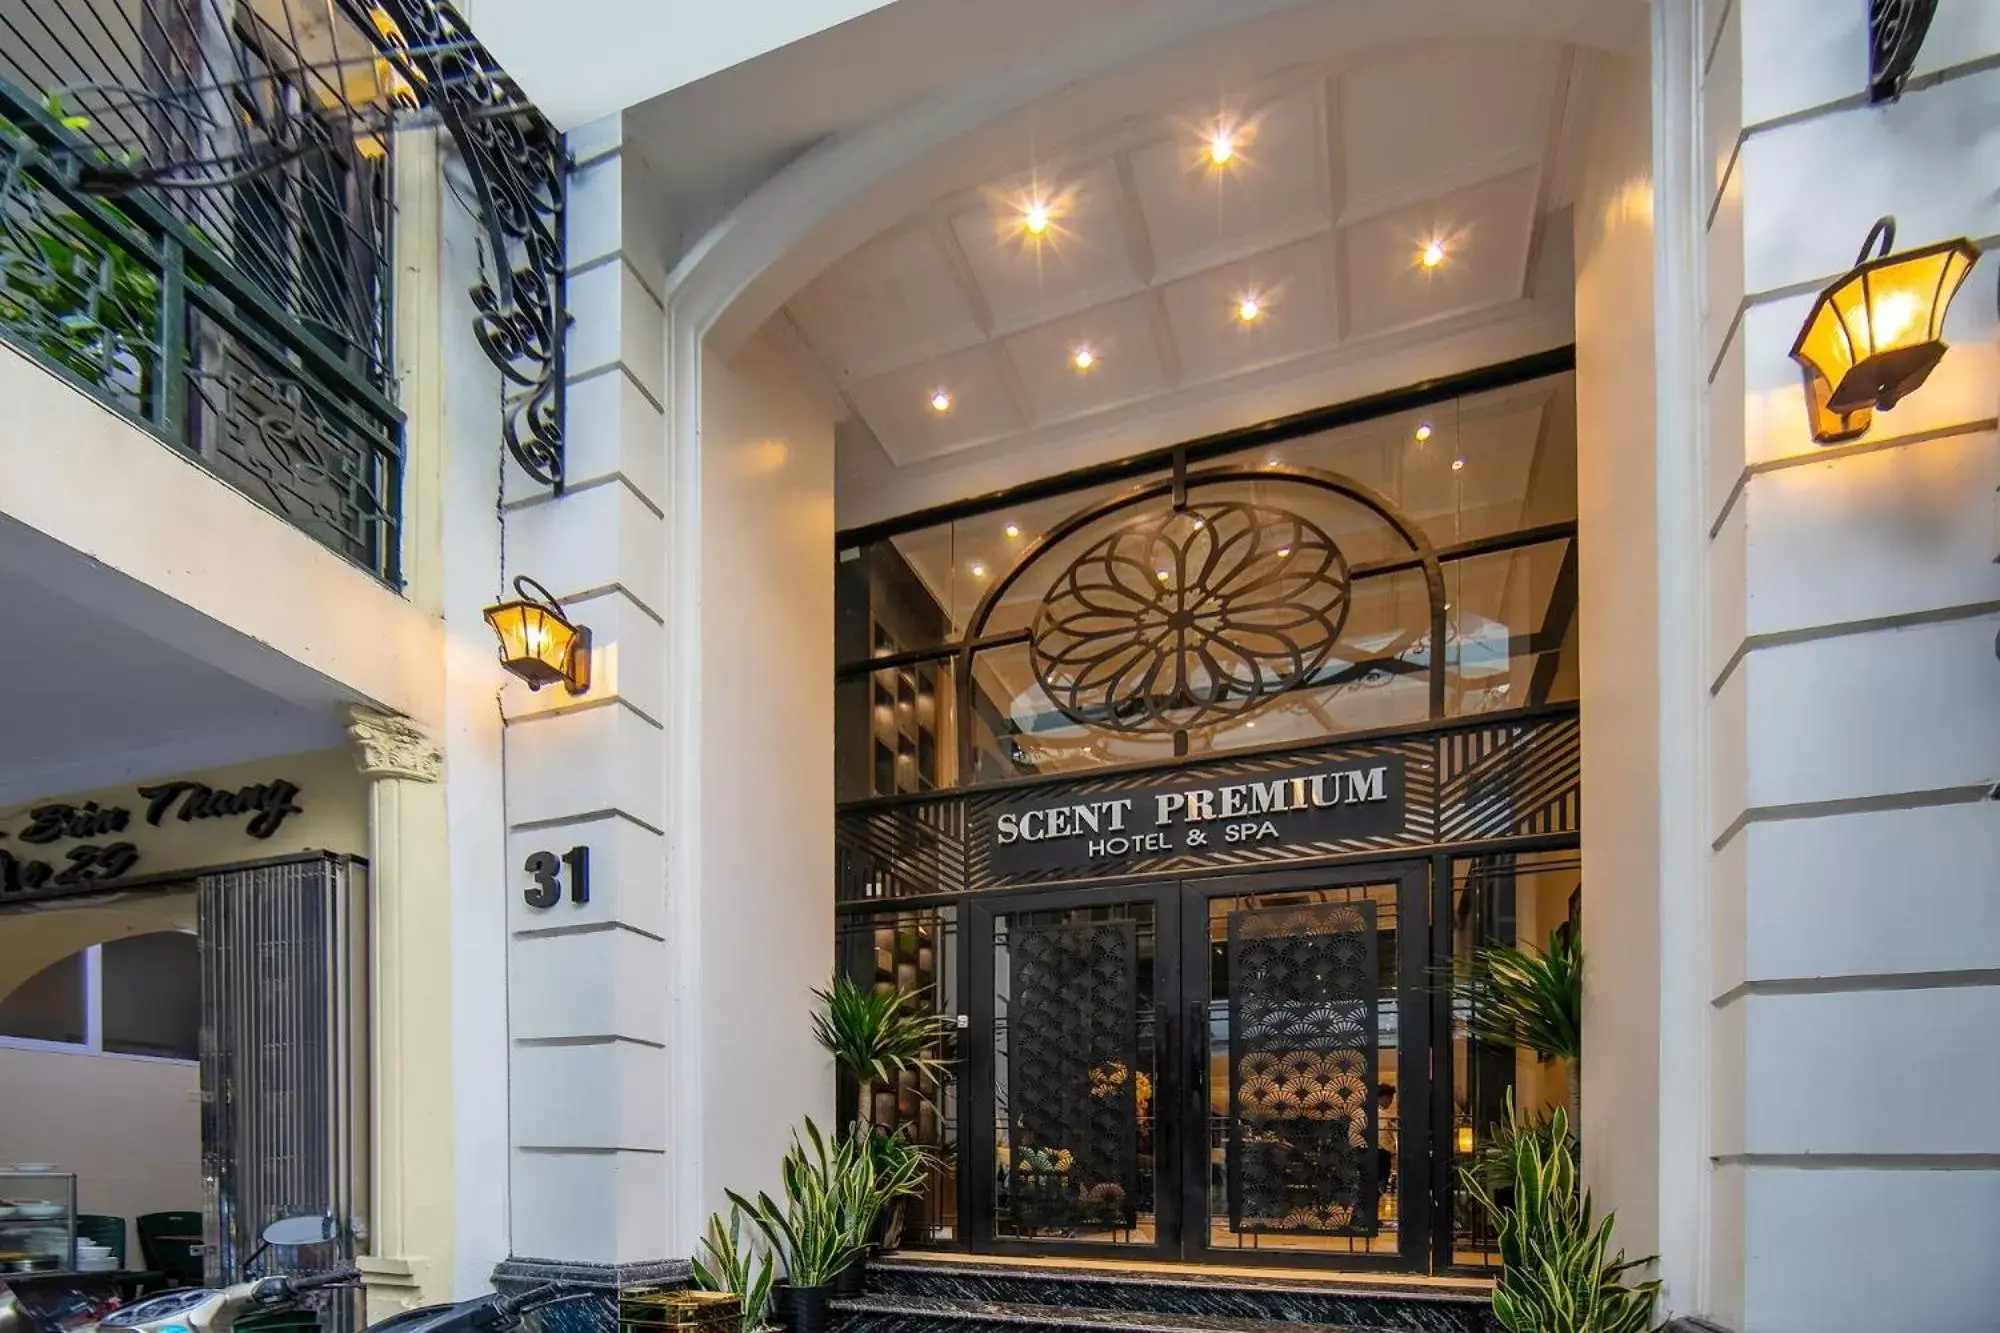 Property building in Scent Premium Hotel